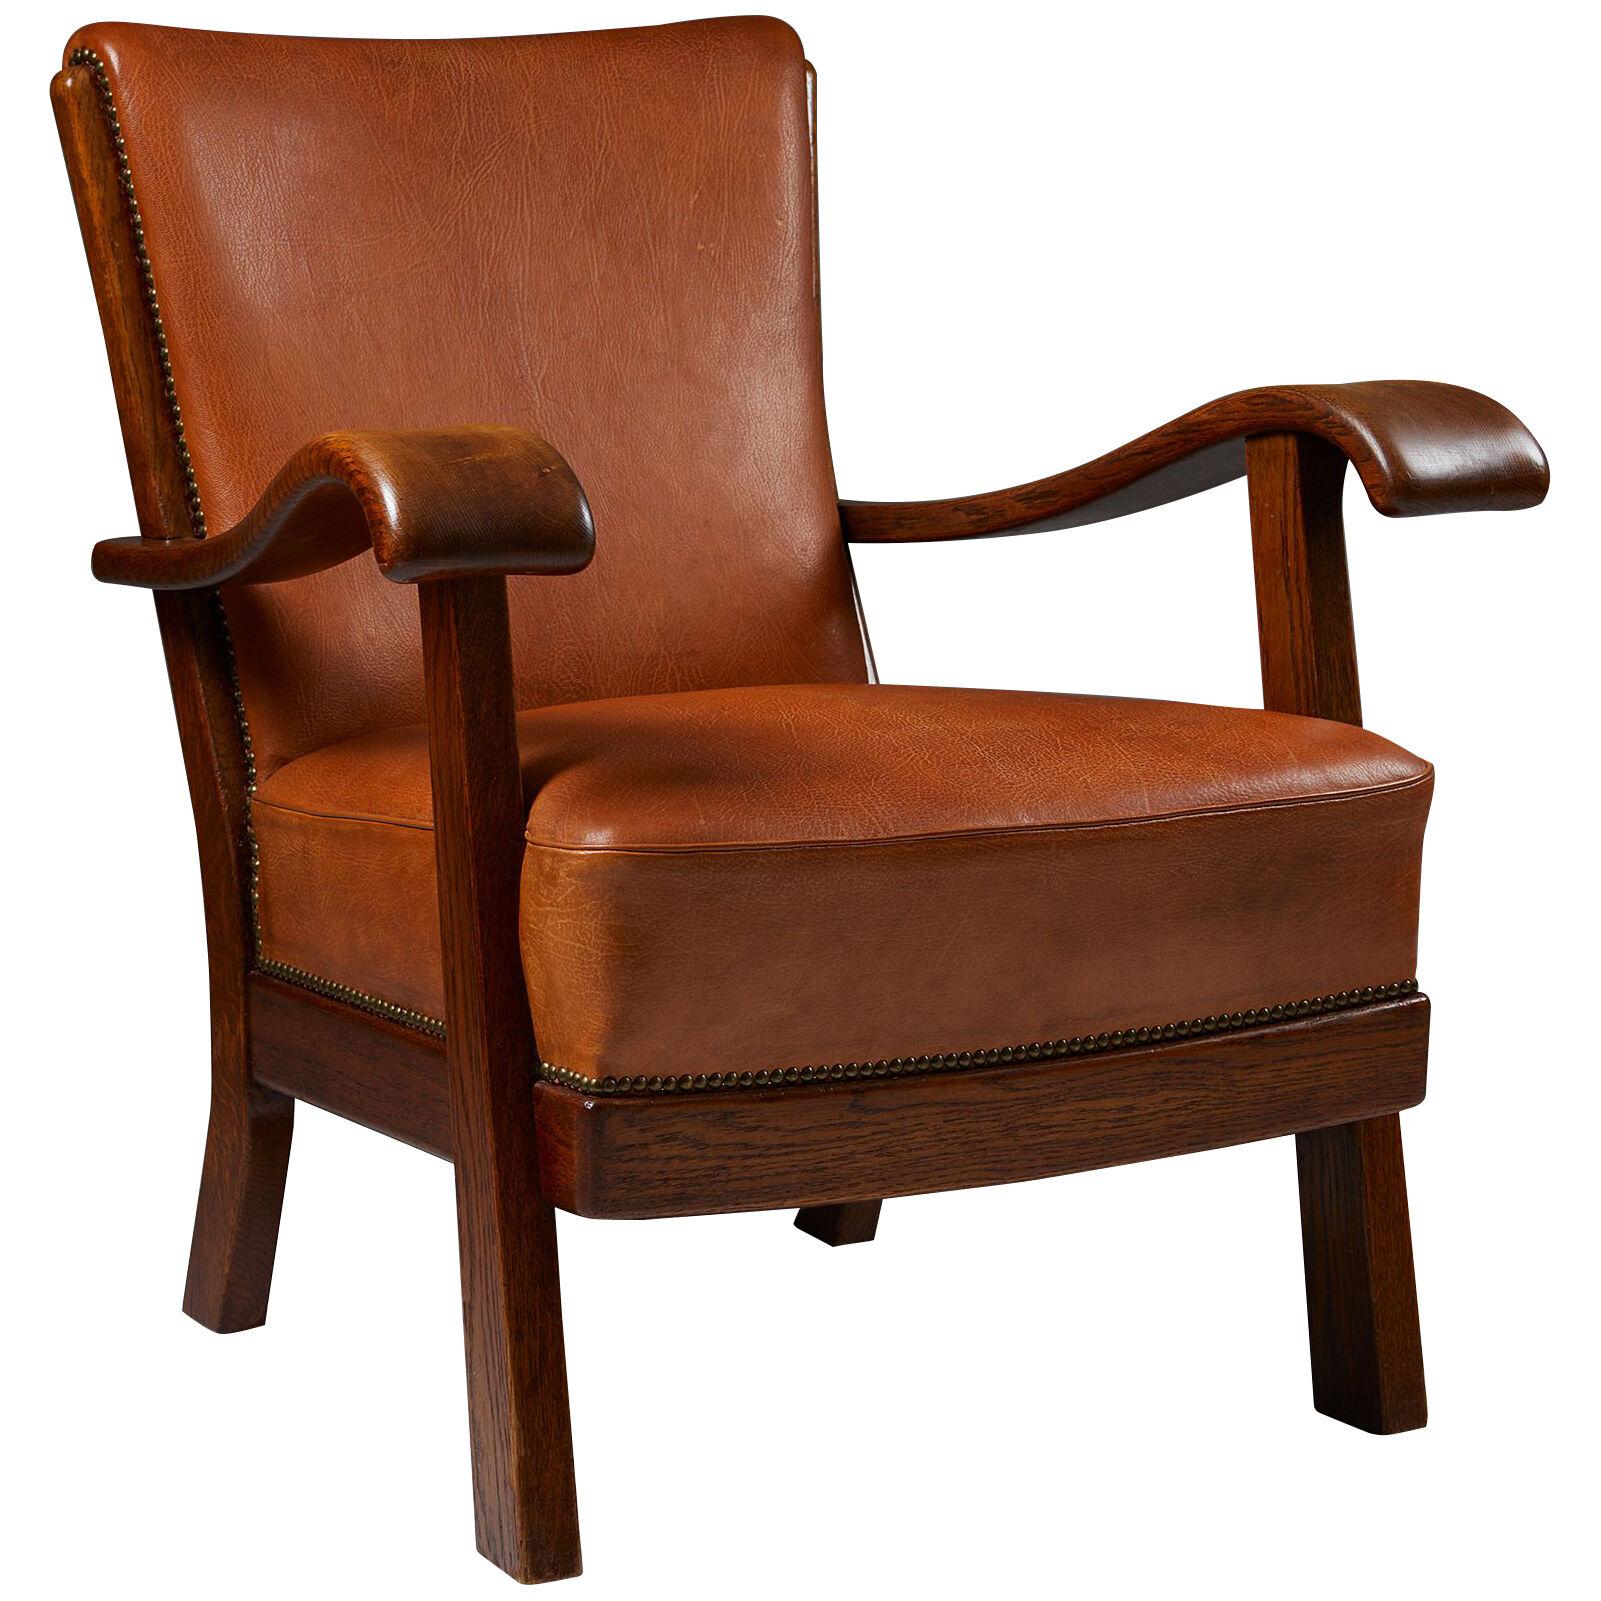 Easy chair designed by Viggo S. Jörgensen and Hans Christian Hansen.